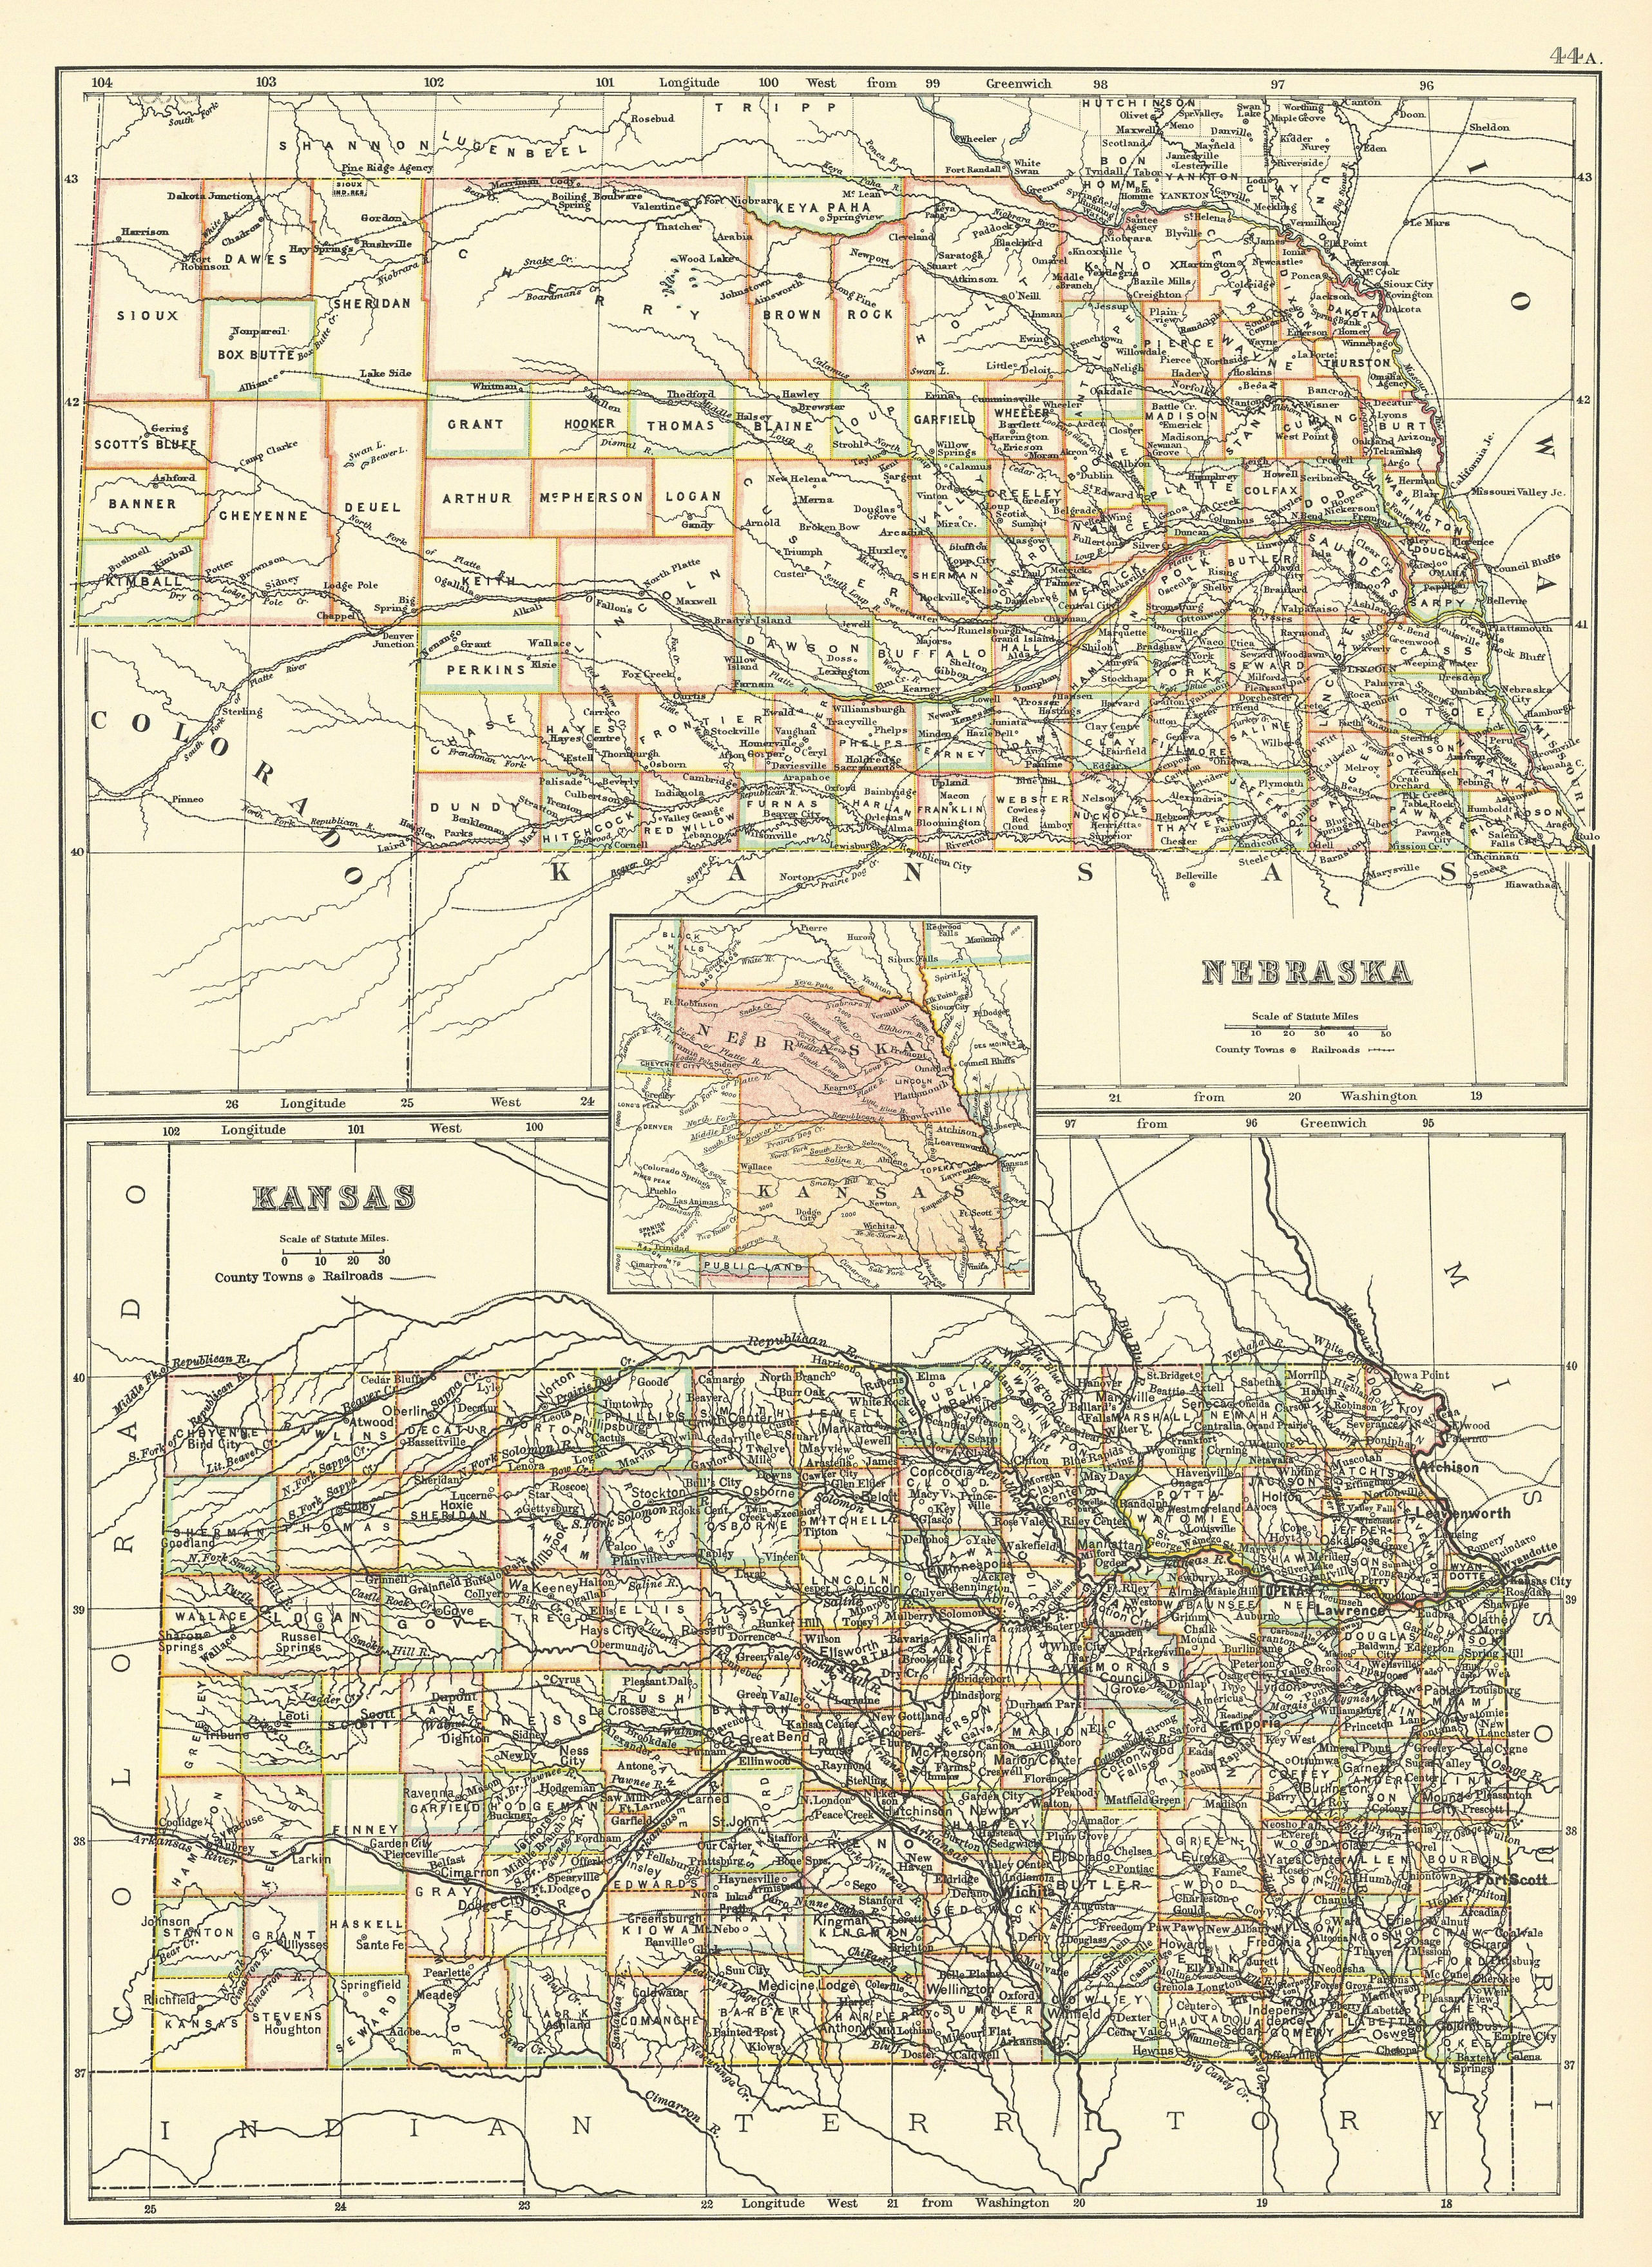 Associate Product Nebraska and Kansas state maps showing counties. BARTHOLOMEW 1898 old